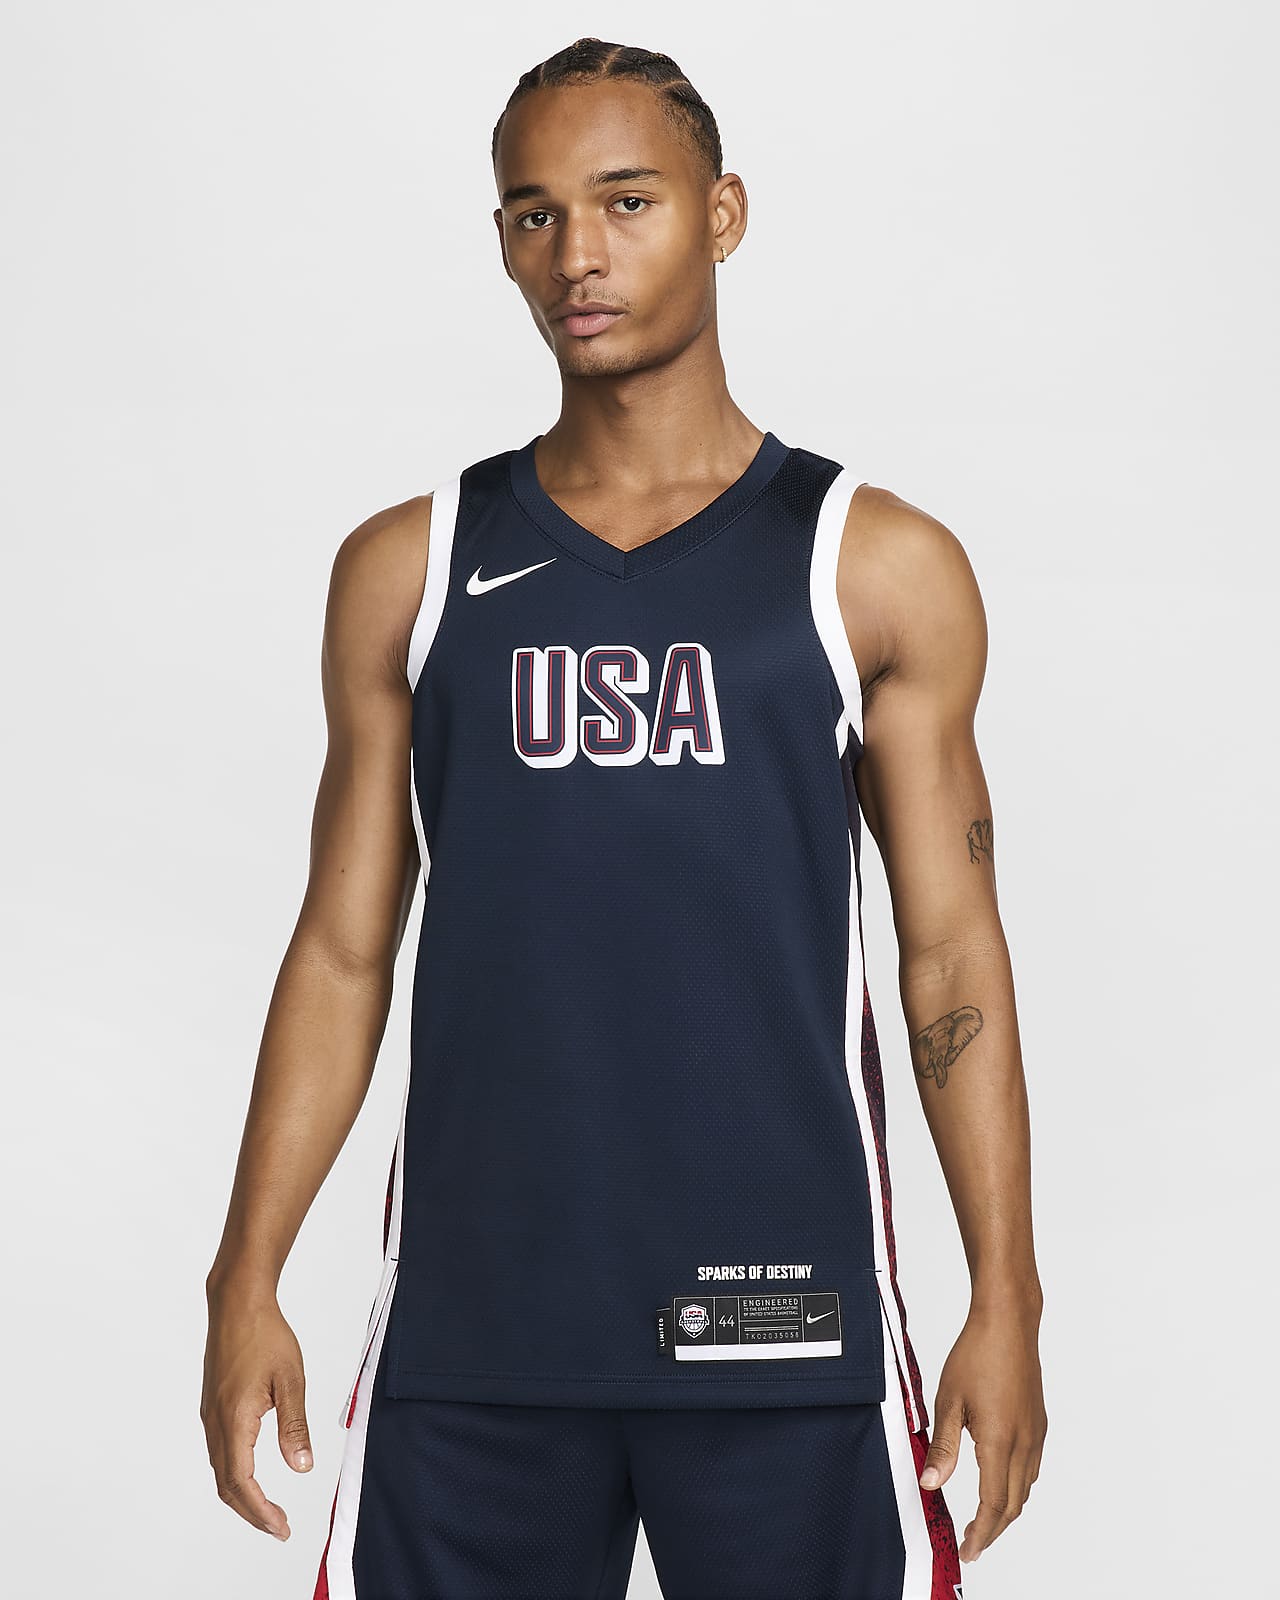 USAB Limited Road Nike basketbaljersey voor heren